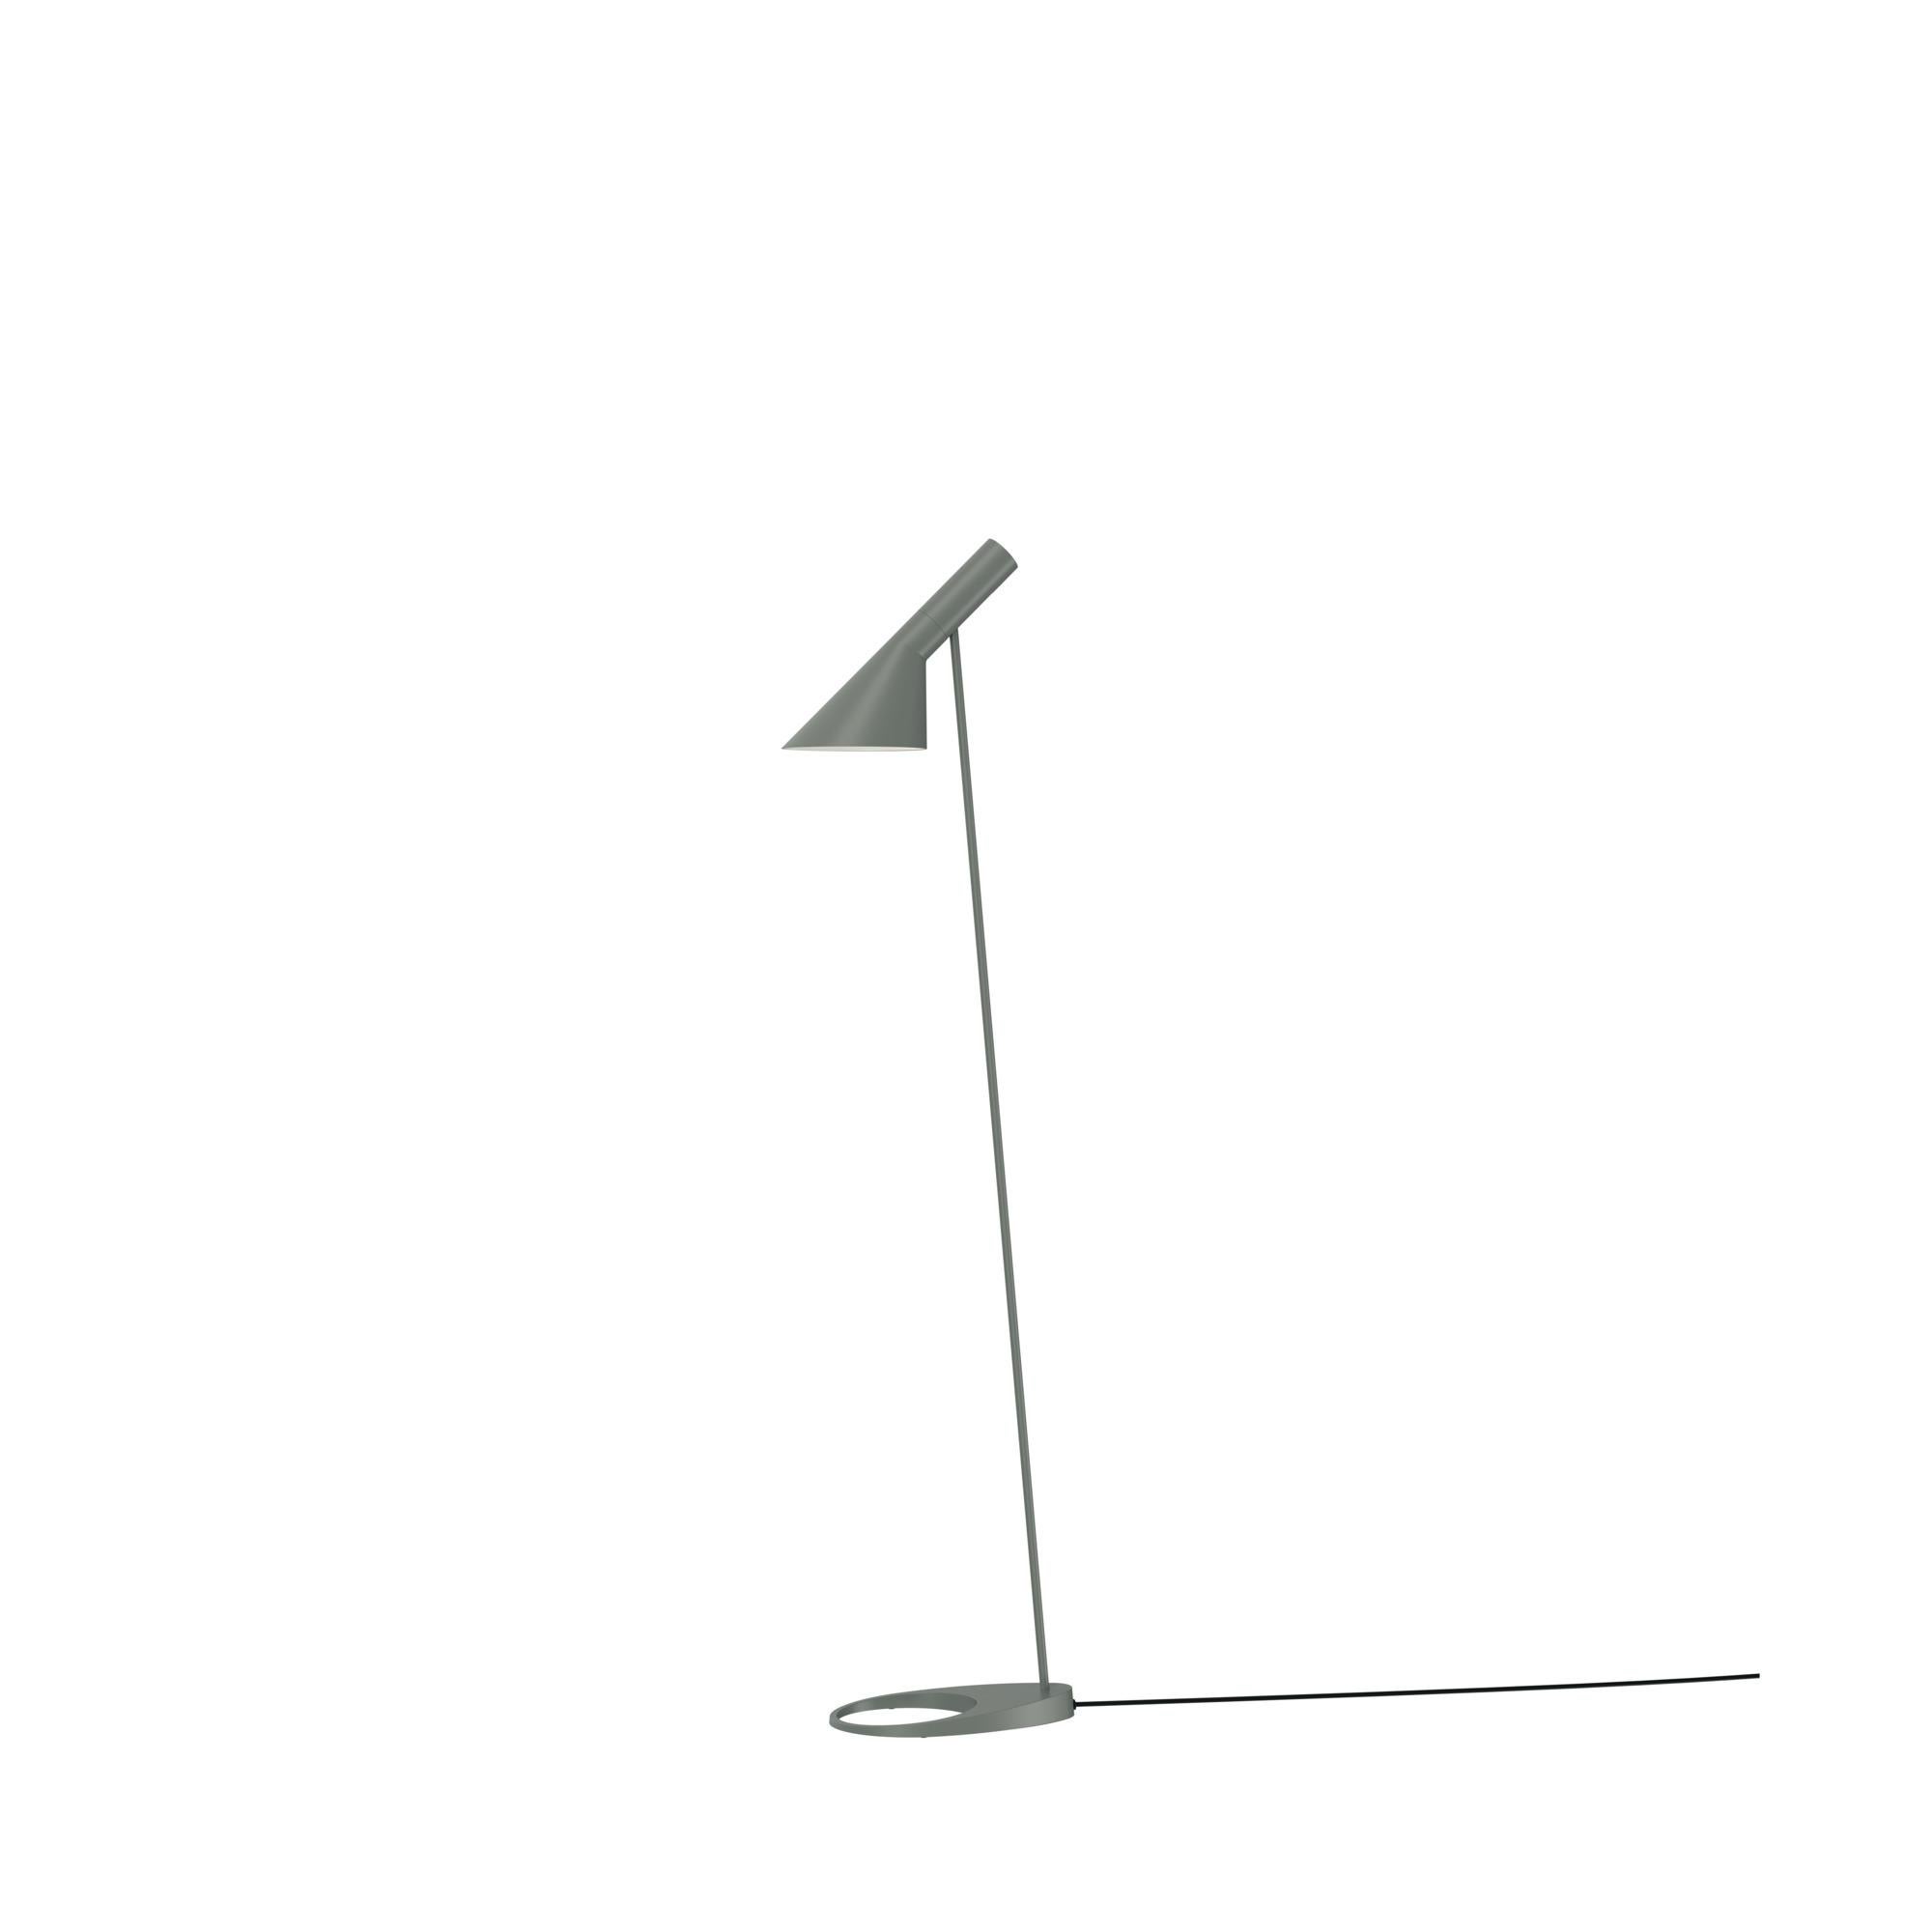 Arne Jacobsen AJ Floor Lamp in Warm Sand for Louis Poulsen For Sale 9